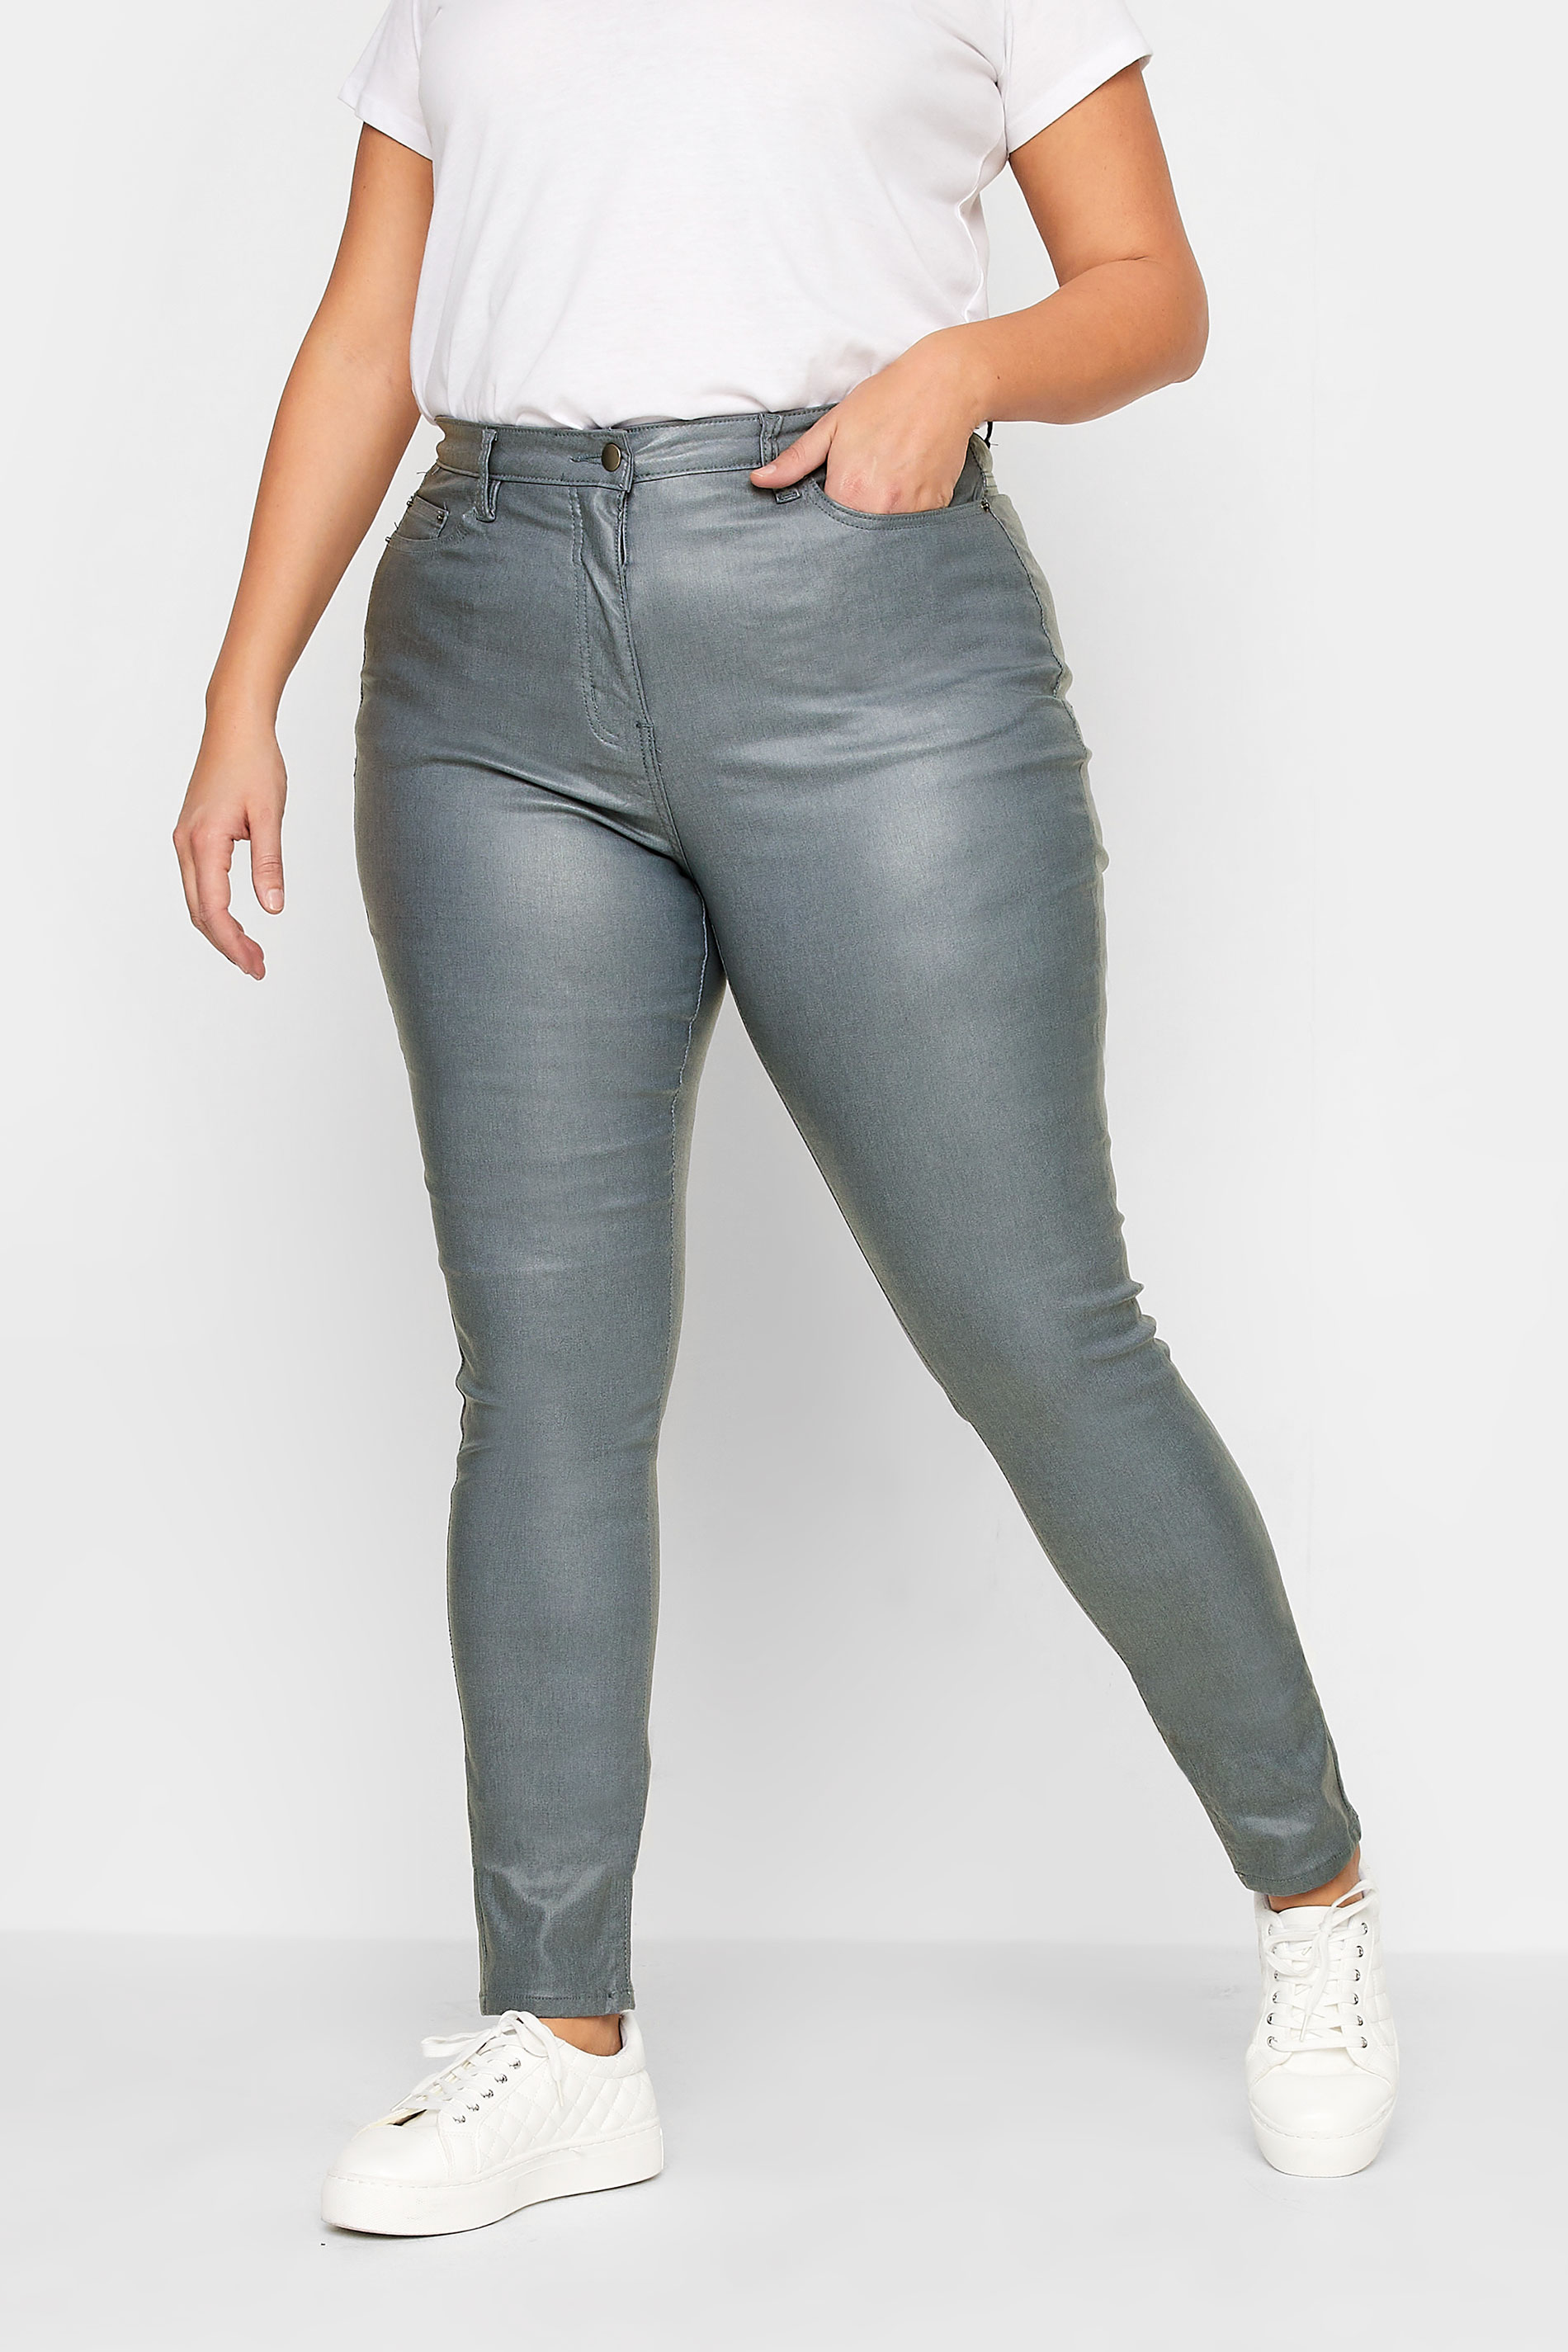 LTS Tall Women's Blue Coated AVA Skinny Jeans | Long Tall Sally  1